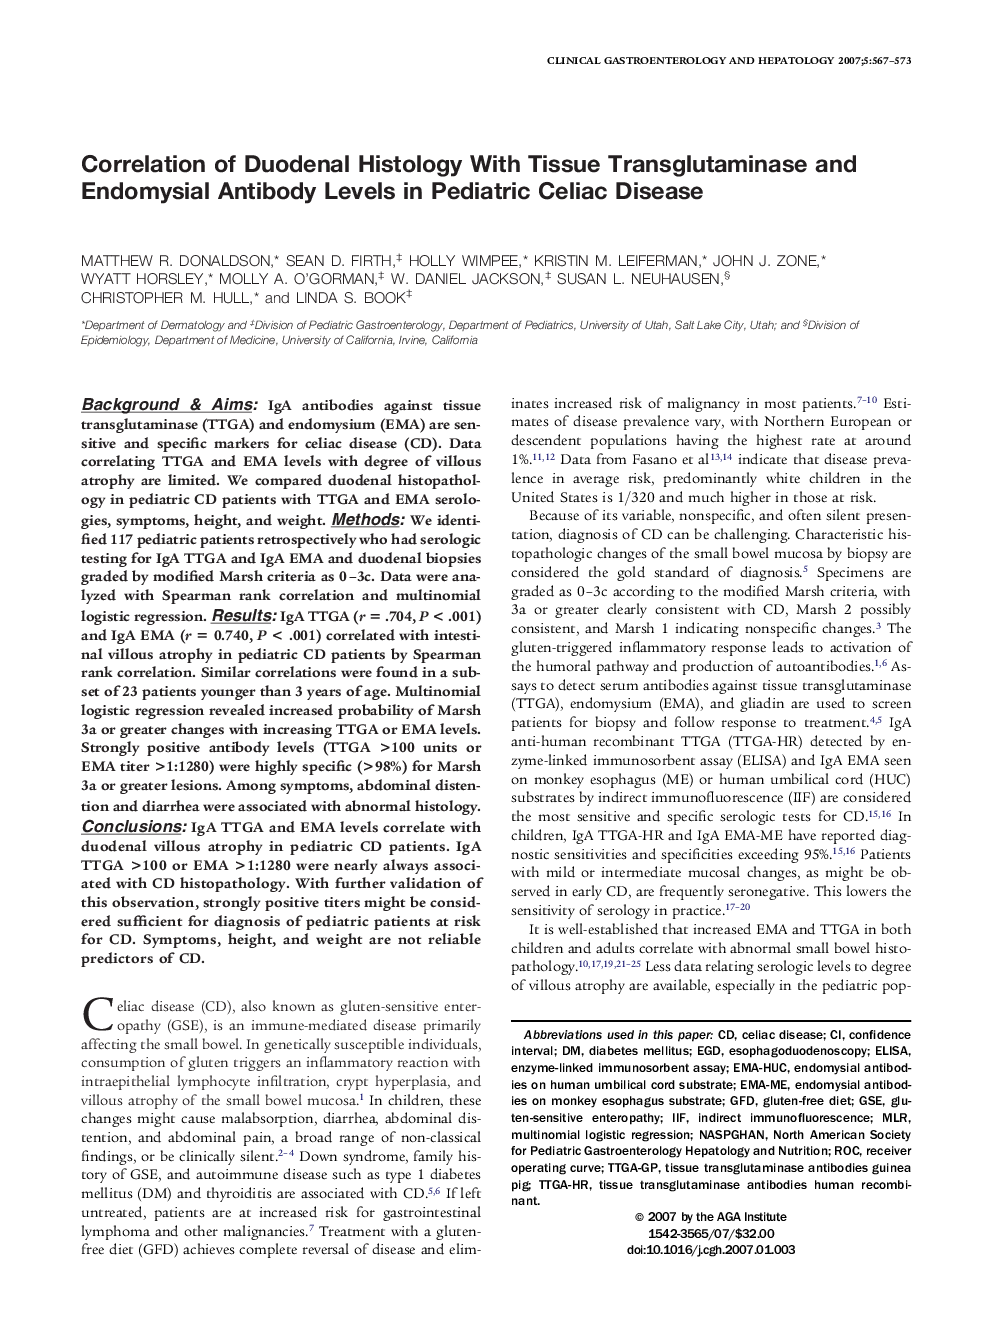 Correlation of Duodenal Histology With Tissue Transglutaminase and Endomysial Antibody Levels in Pediatric Celiac Disease